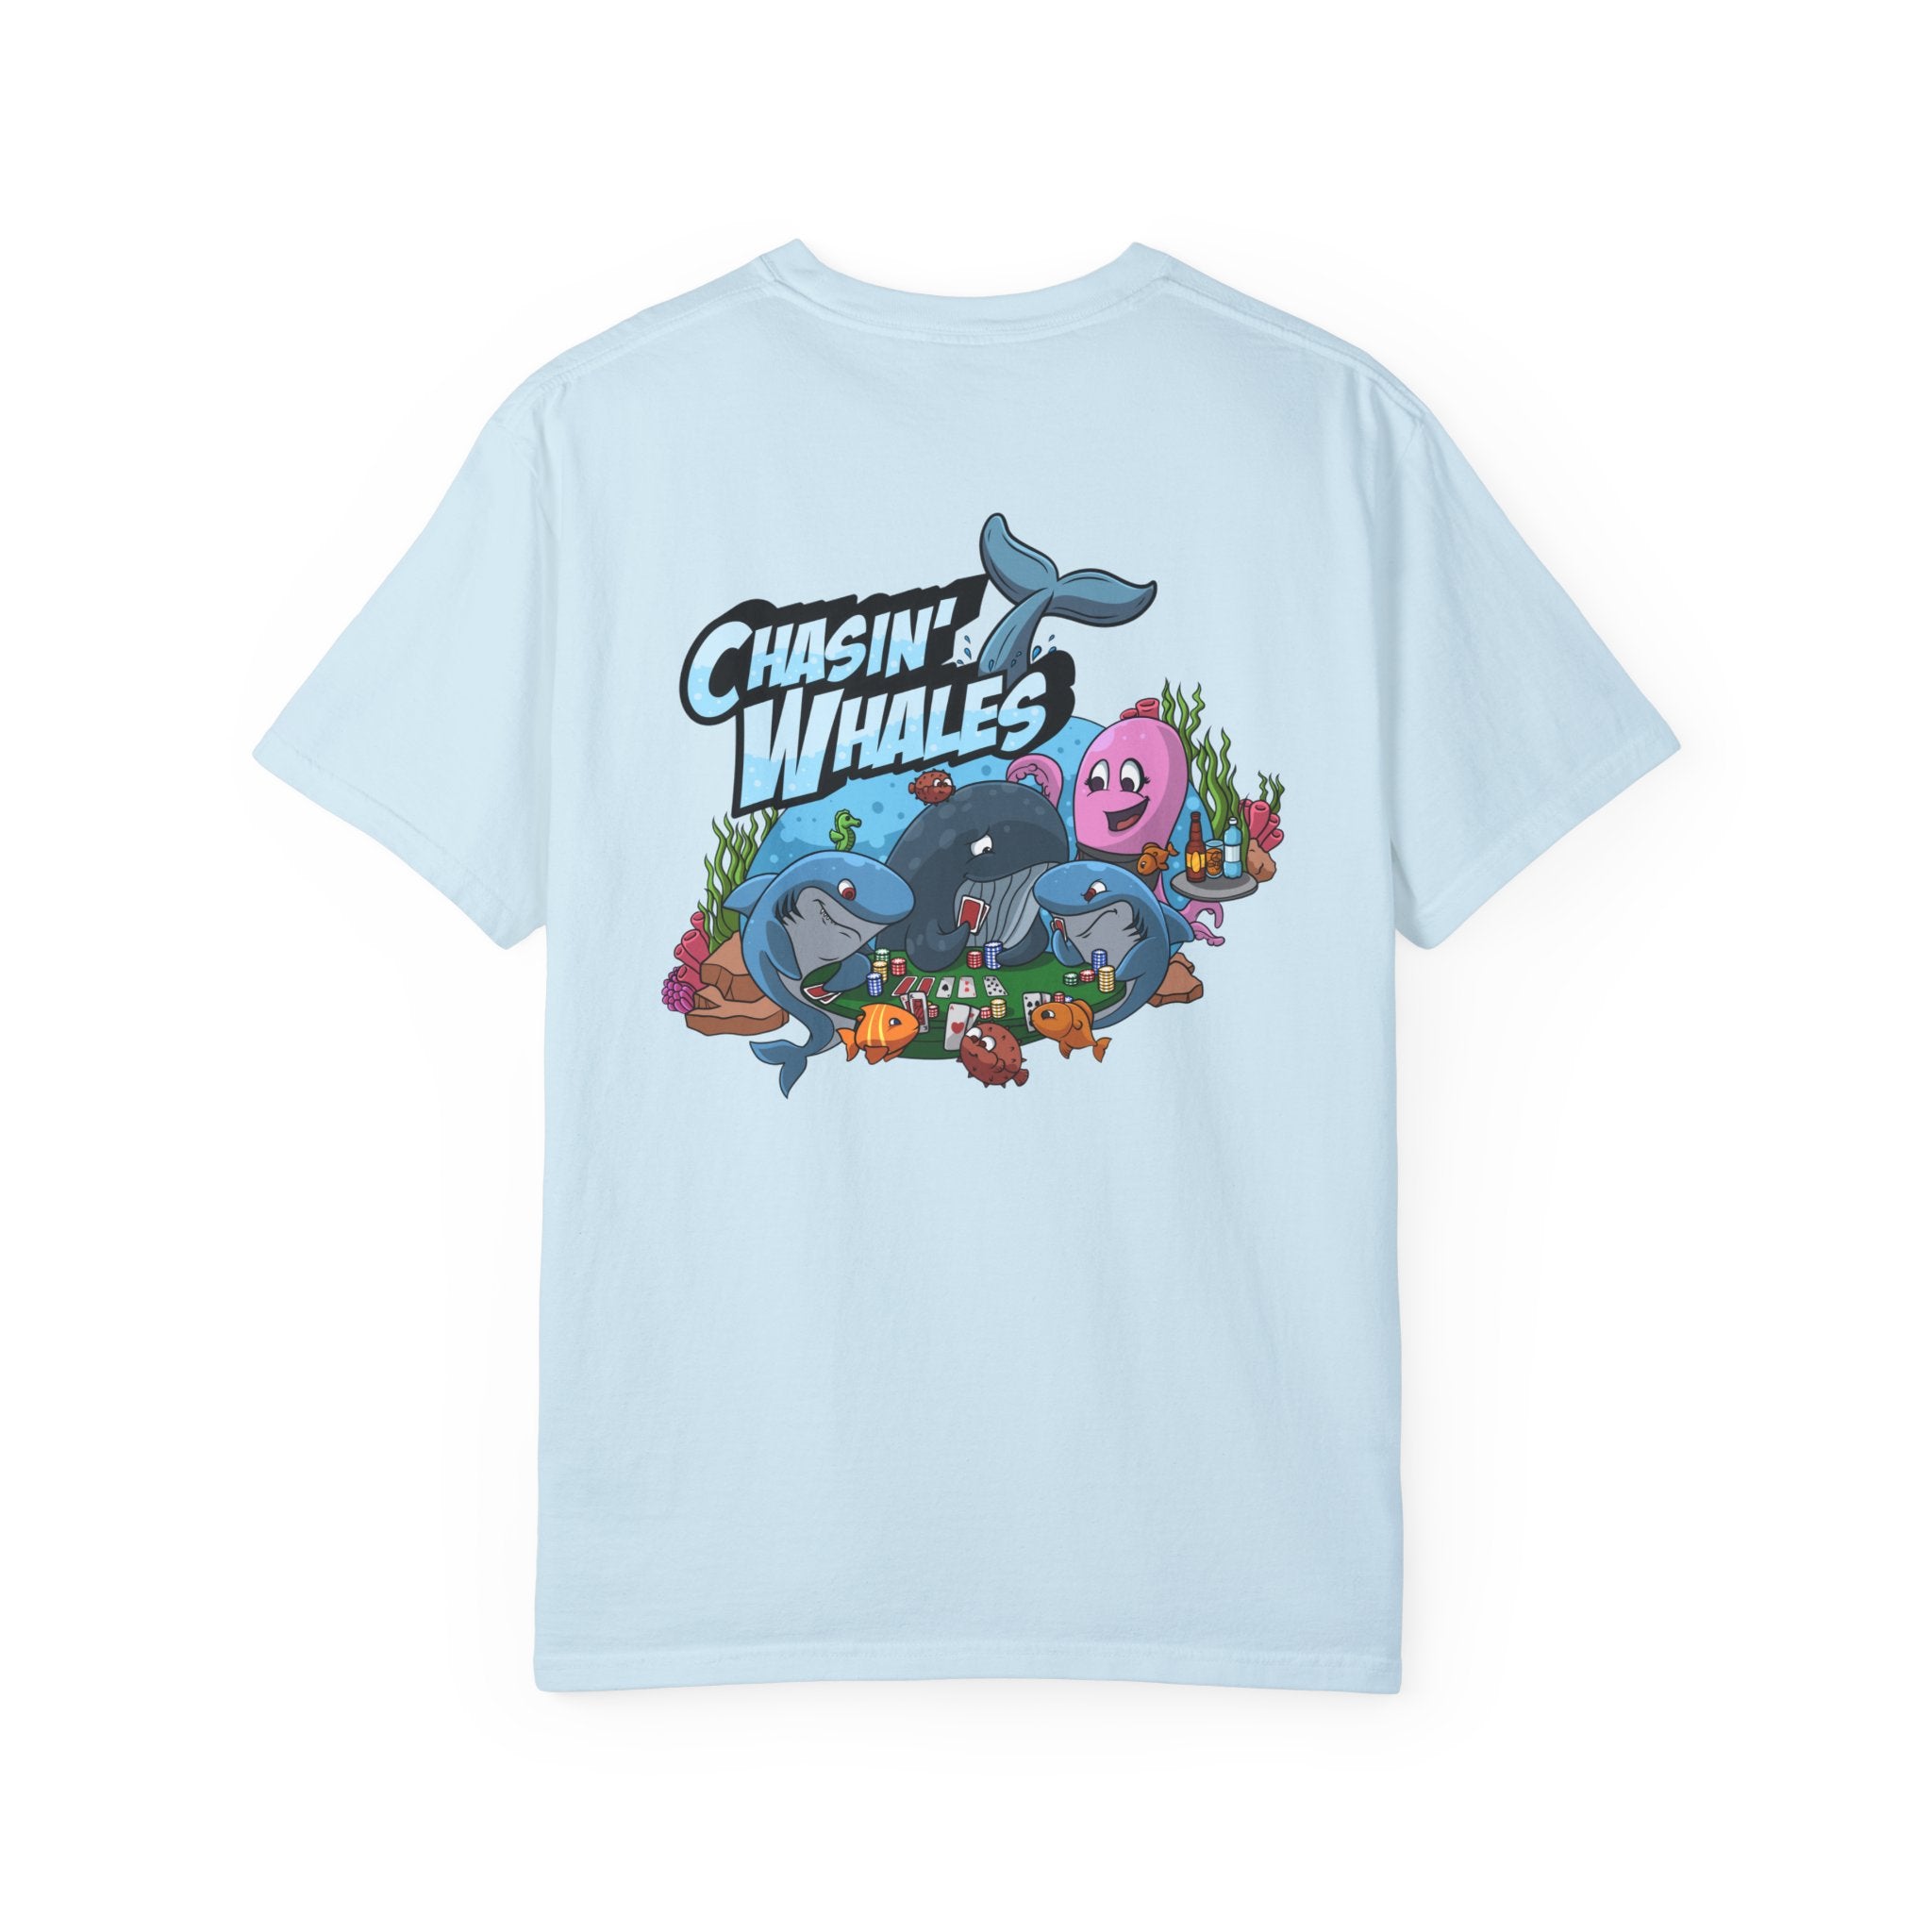 Chasin Whales Poker T-Shirt by Poker Jokers